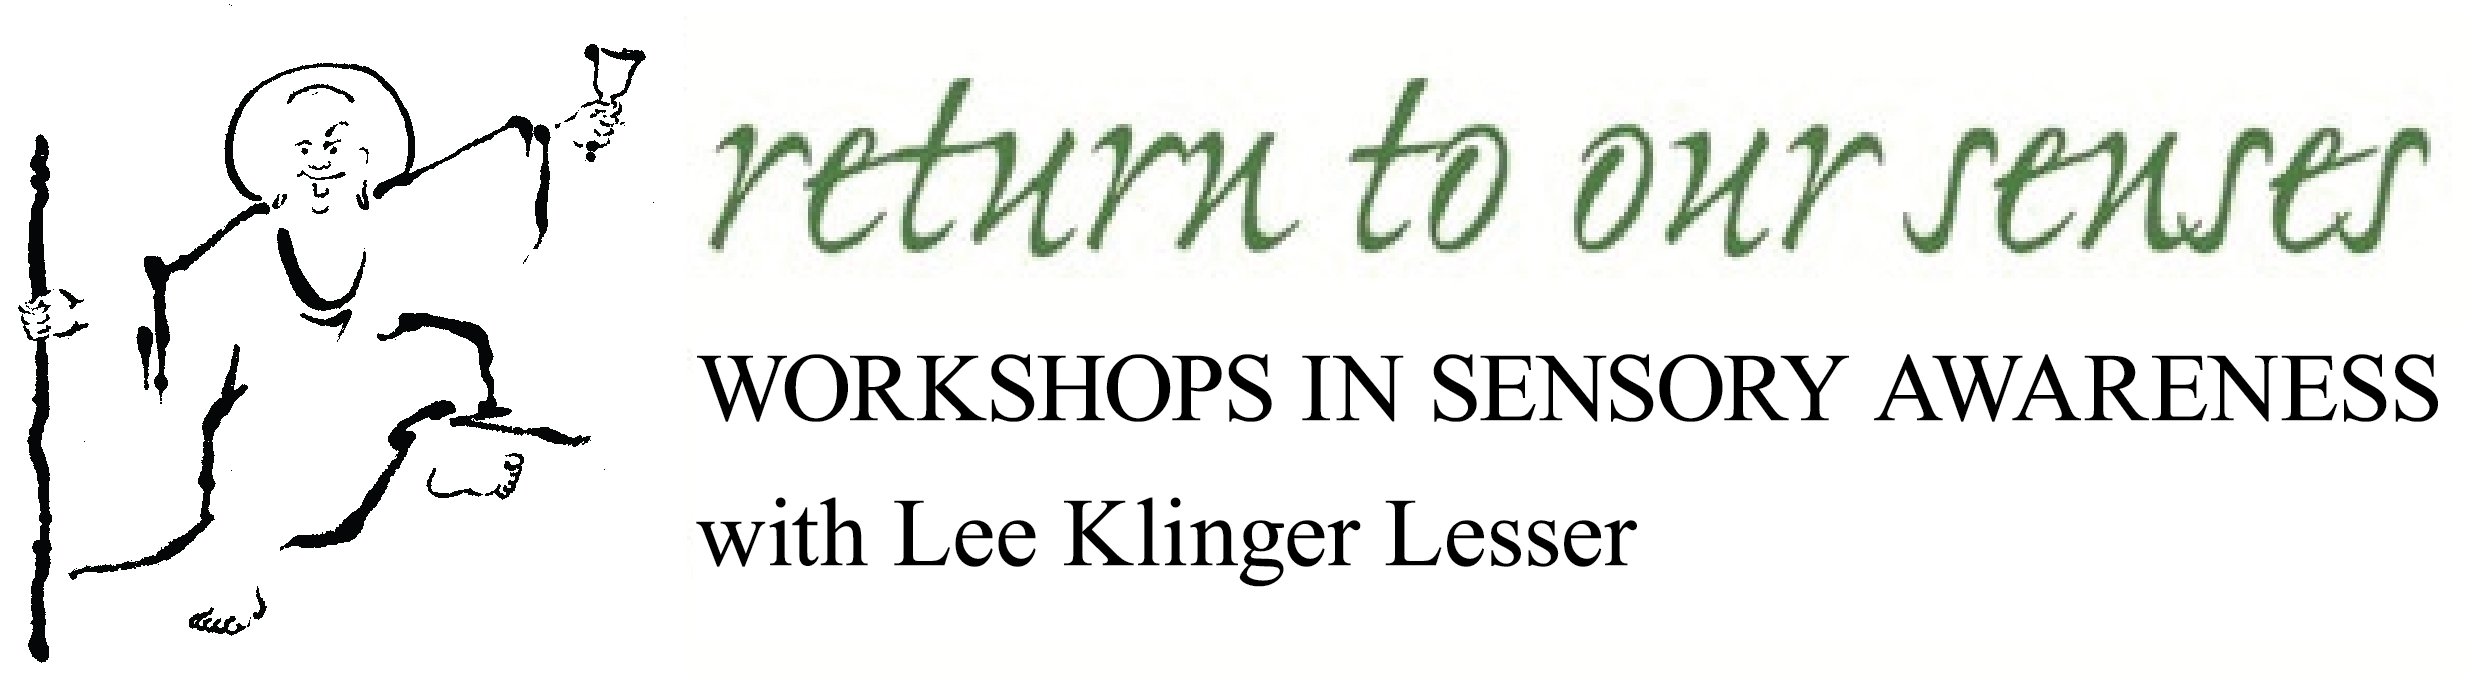 Sensory Awareness with Lee Klinger Lesser